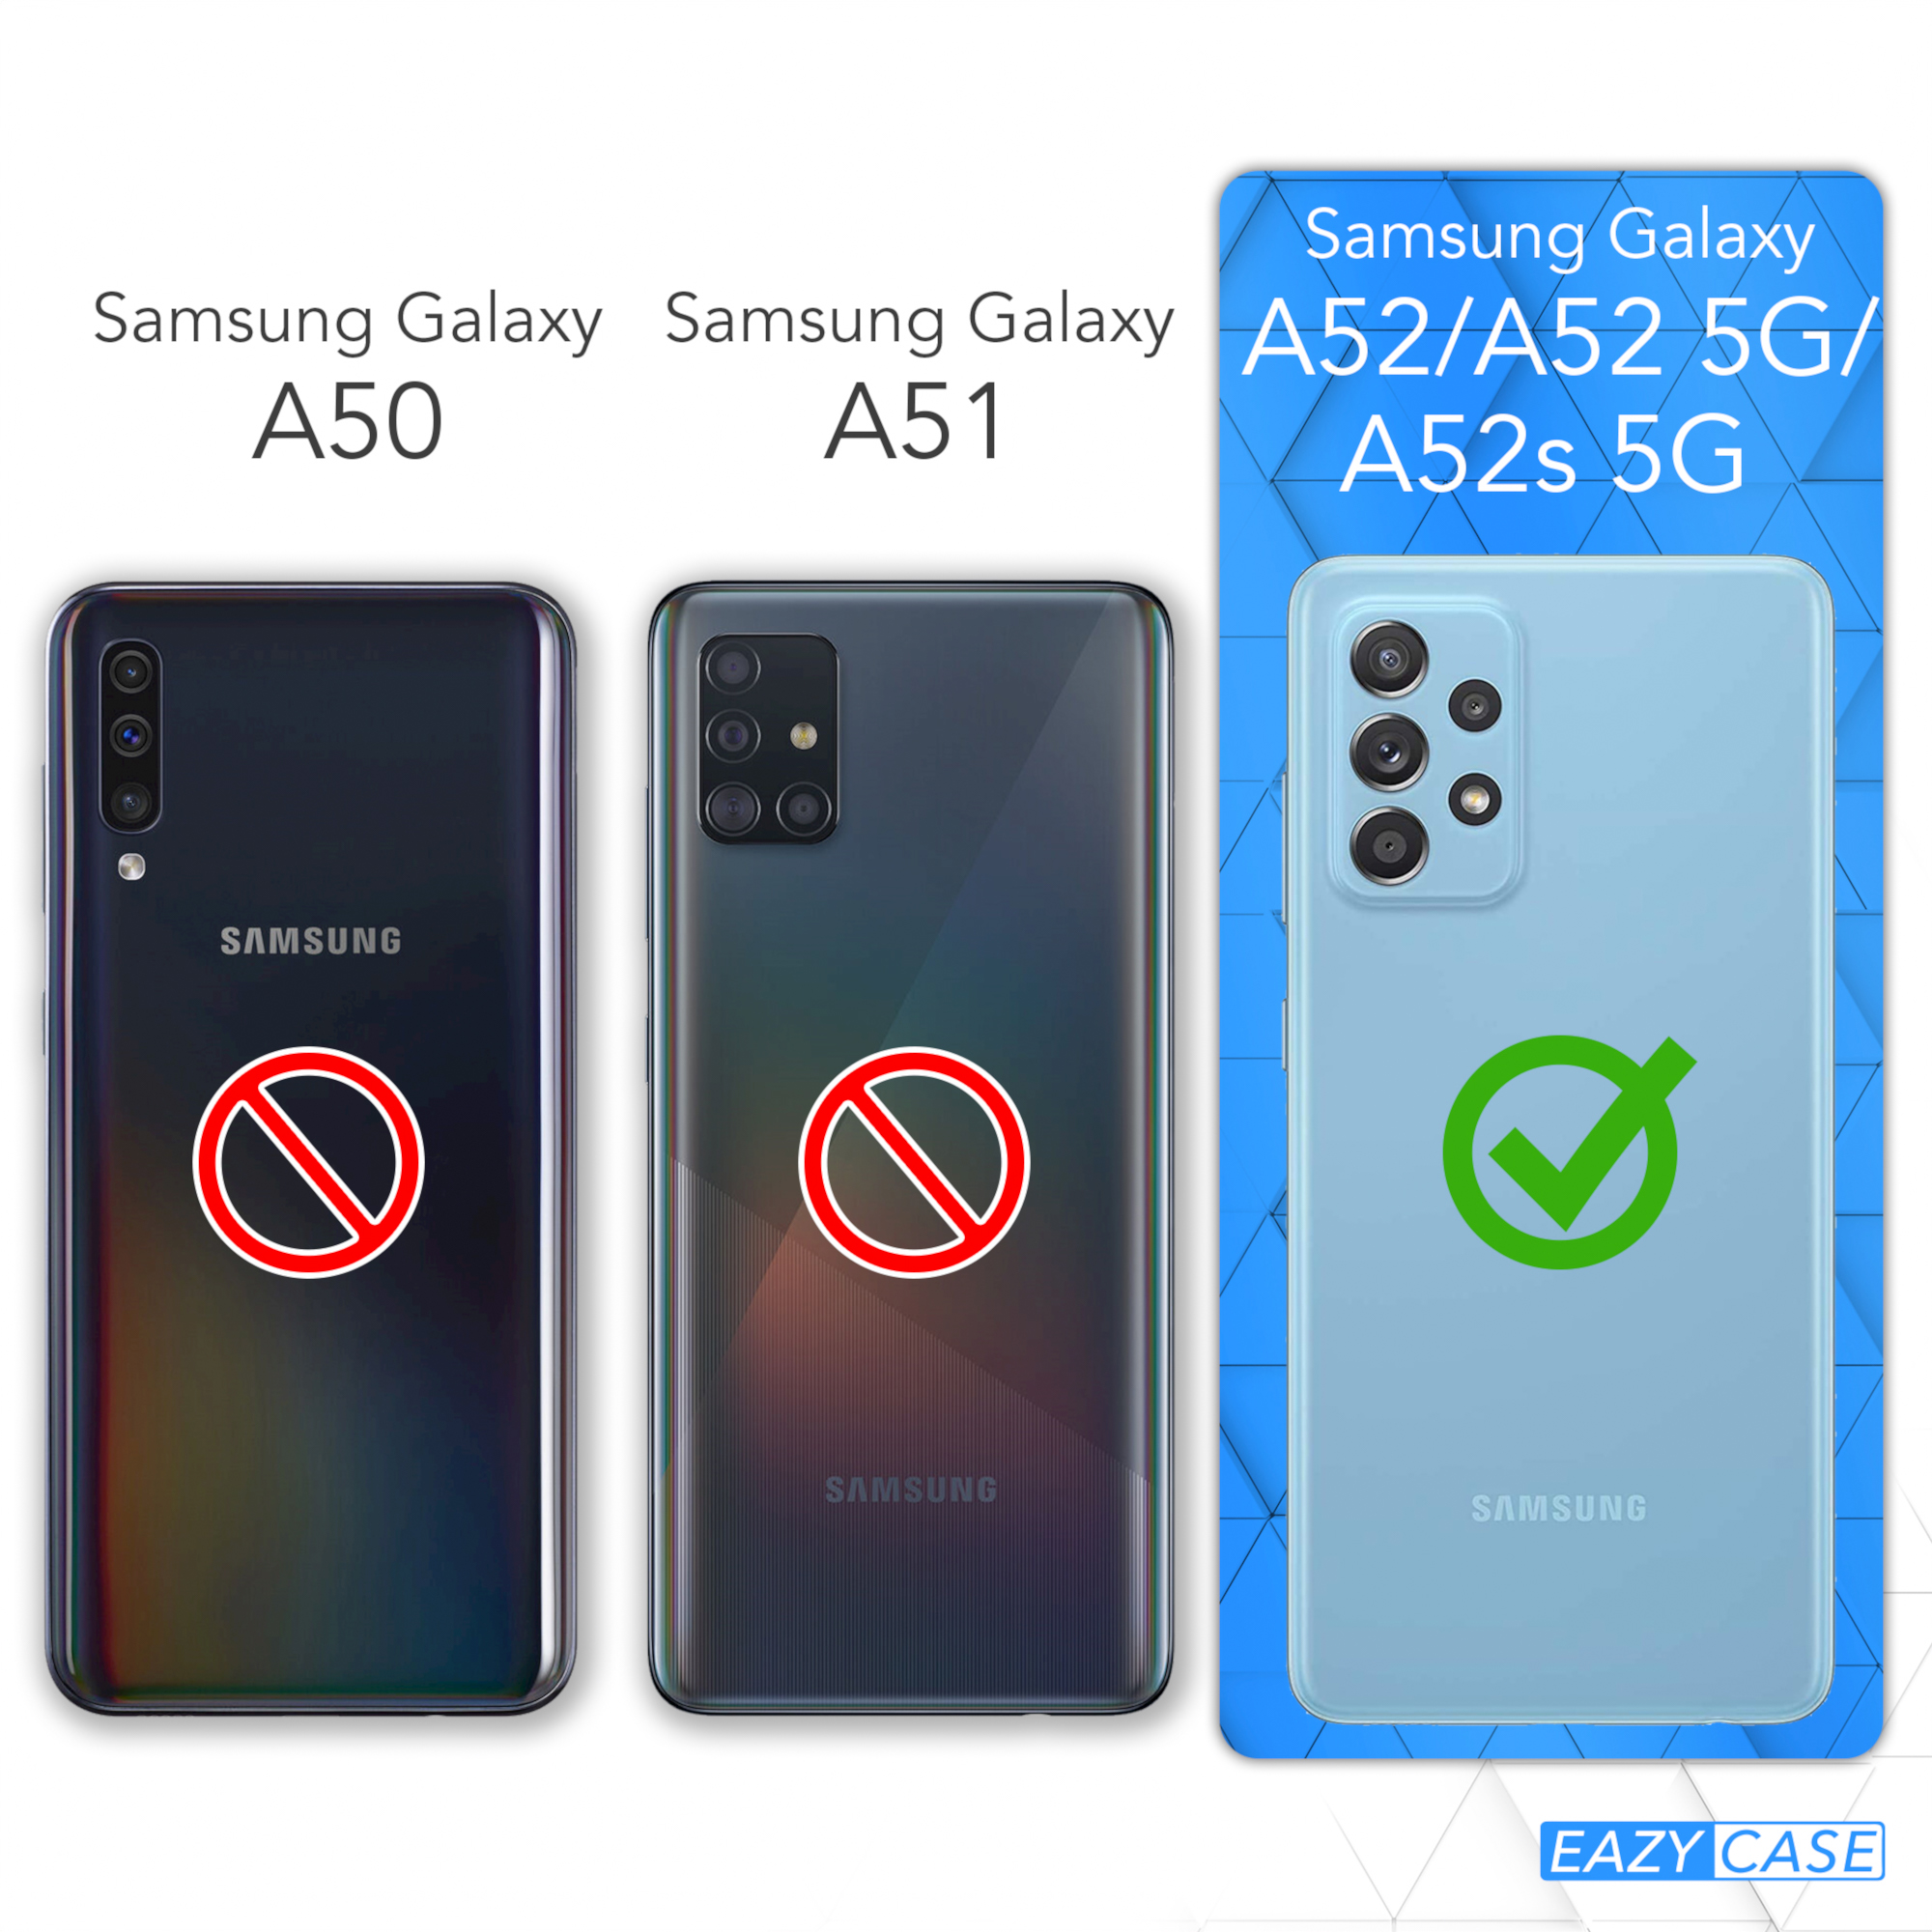 EAZY CASE Transparente Handyhülle runder Galaxy / / 5G Samsung, A52 A52s unifarbend, Altrosa Kette mit 5G, Coral Umhängetasche, A52 